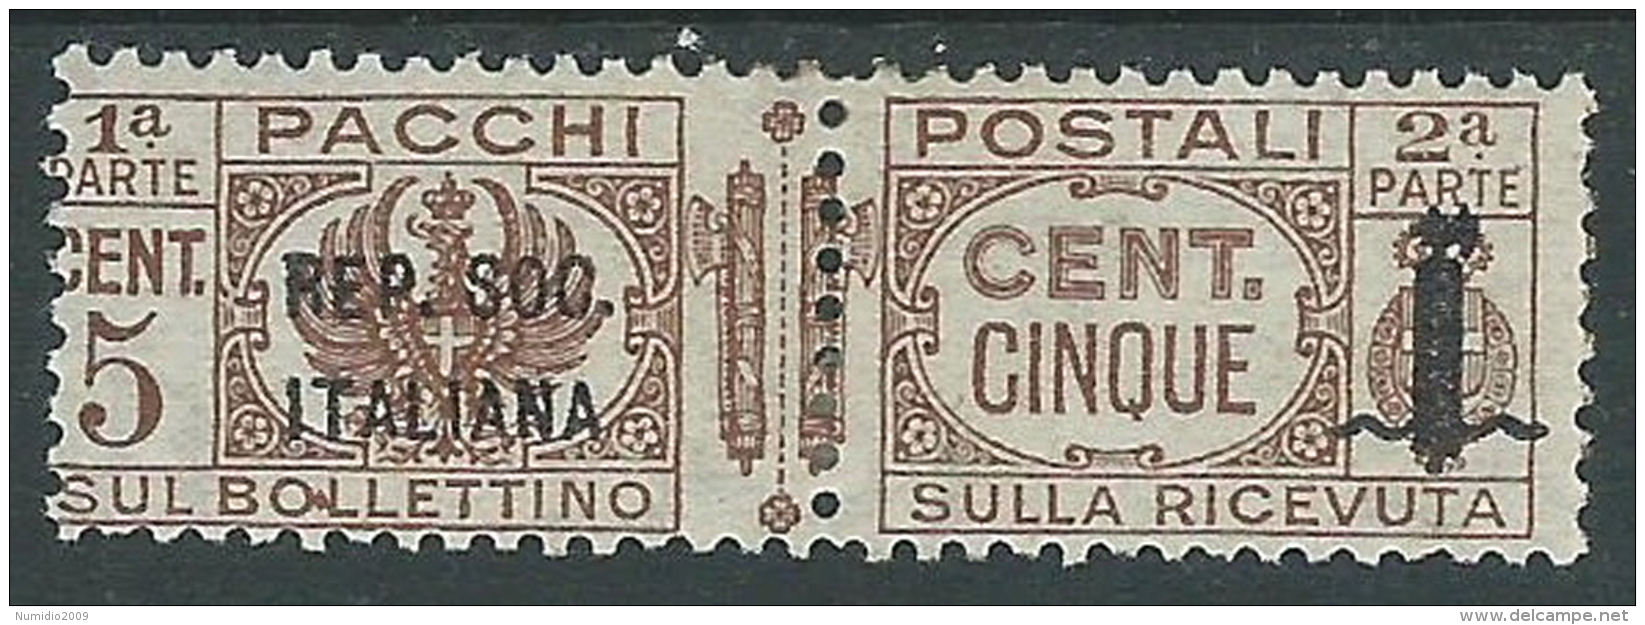 1944 RSI PACCHI POSTALI 5 CENT VARIETà SOPRASTAMPA 39 Mm MH * - P47-2 - Paquetes Postales